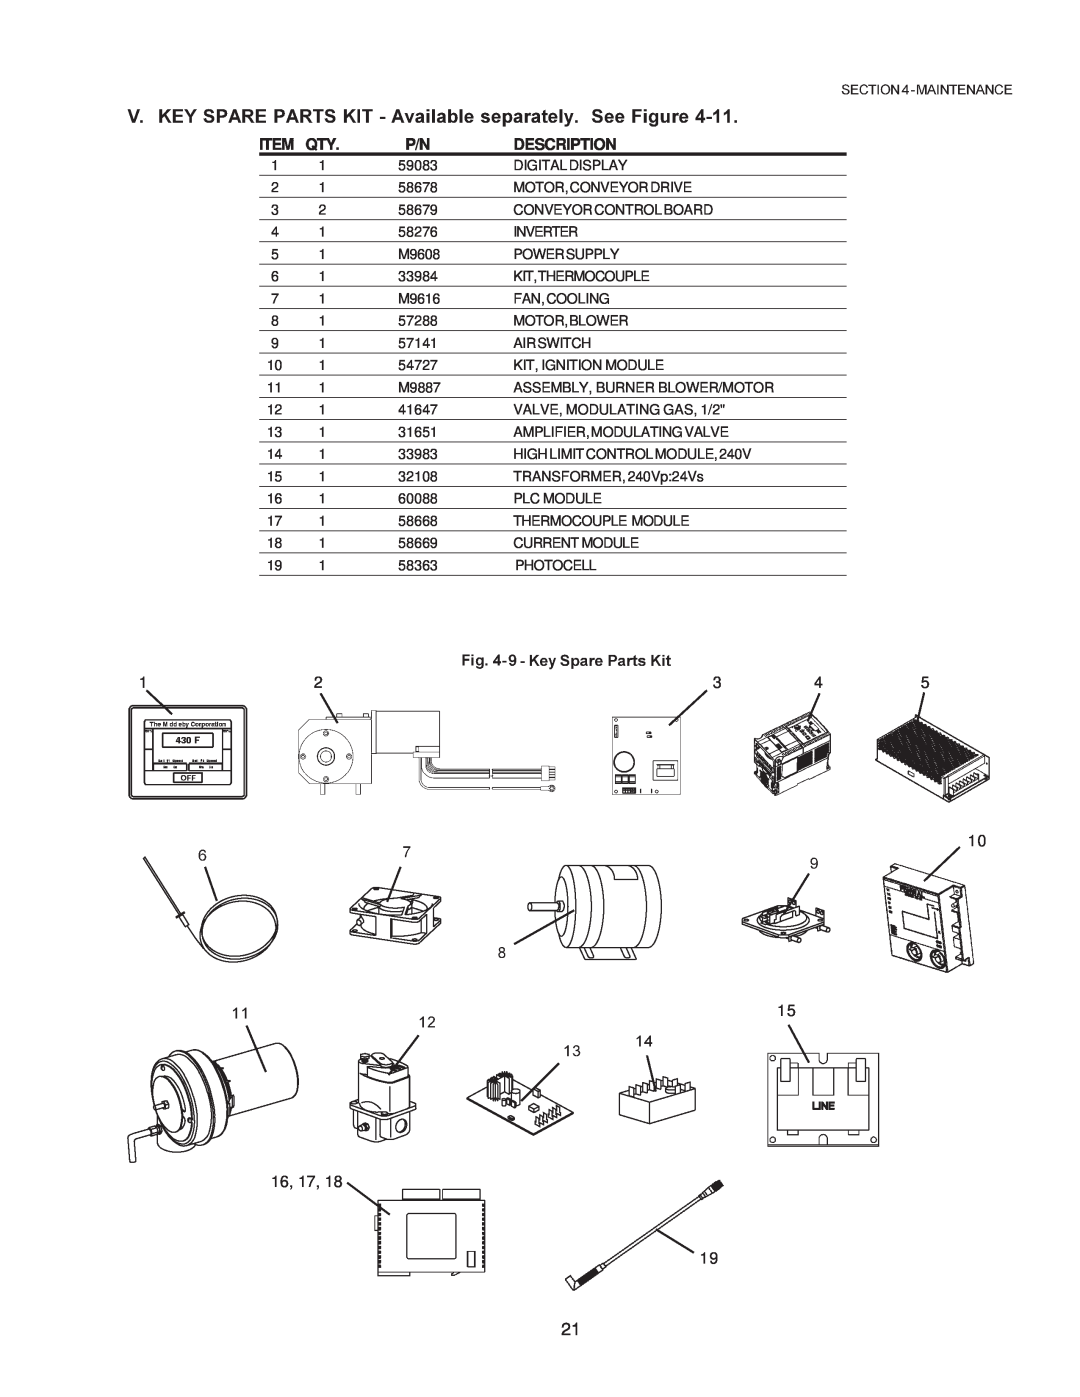 Middleby Marshall PS670 installation manual Description 